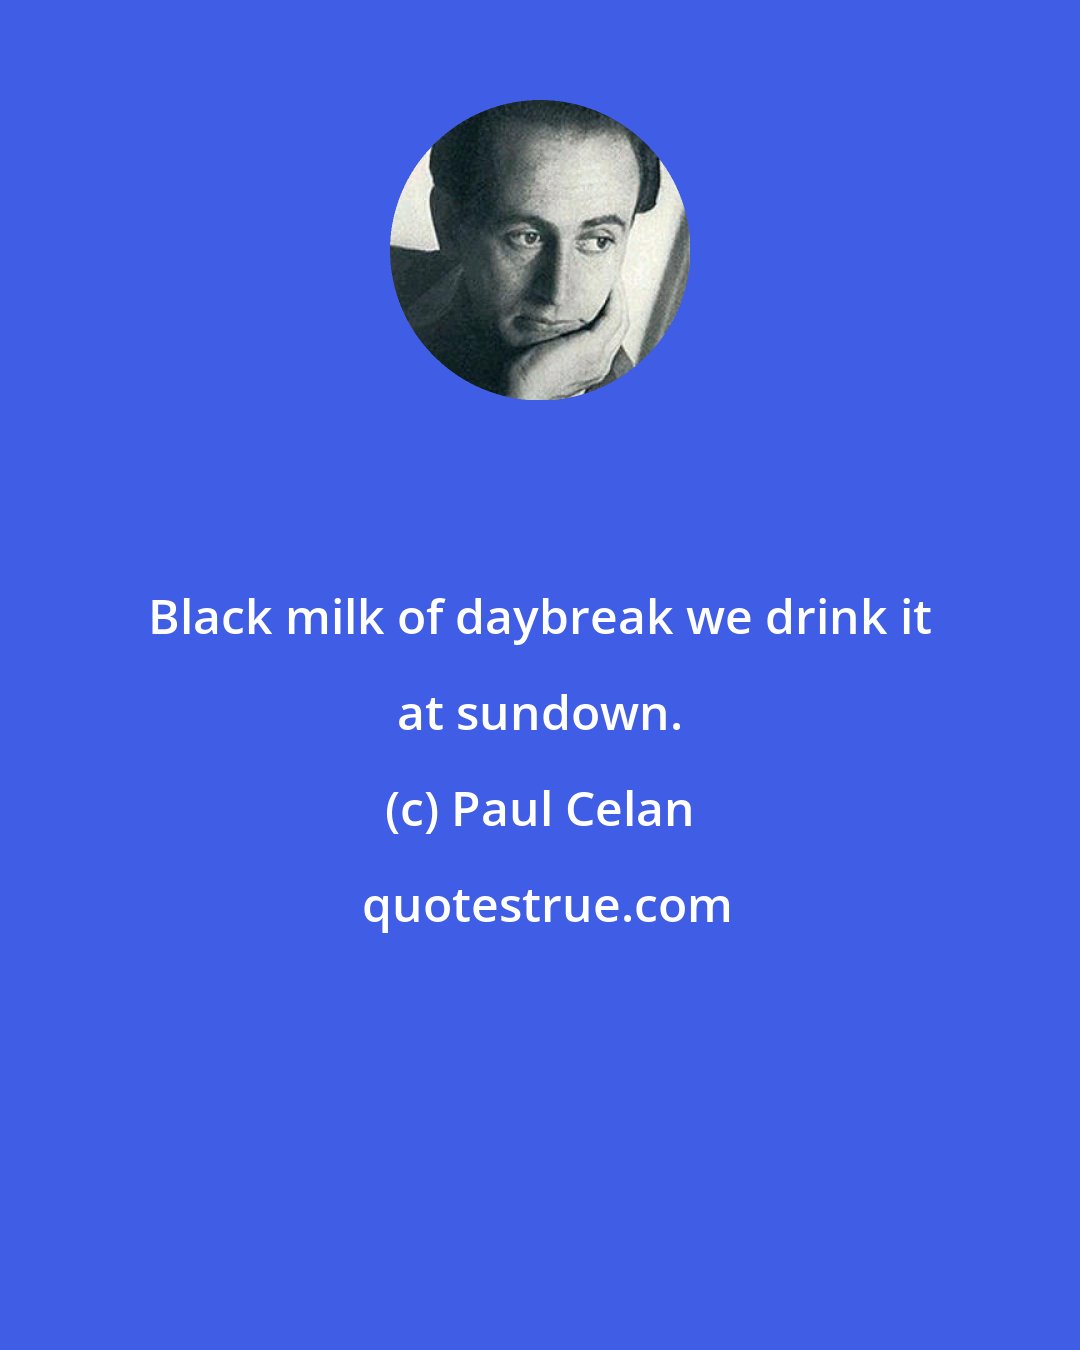 Paul Celan: Black milk of daybreak we drink it at sundown.